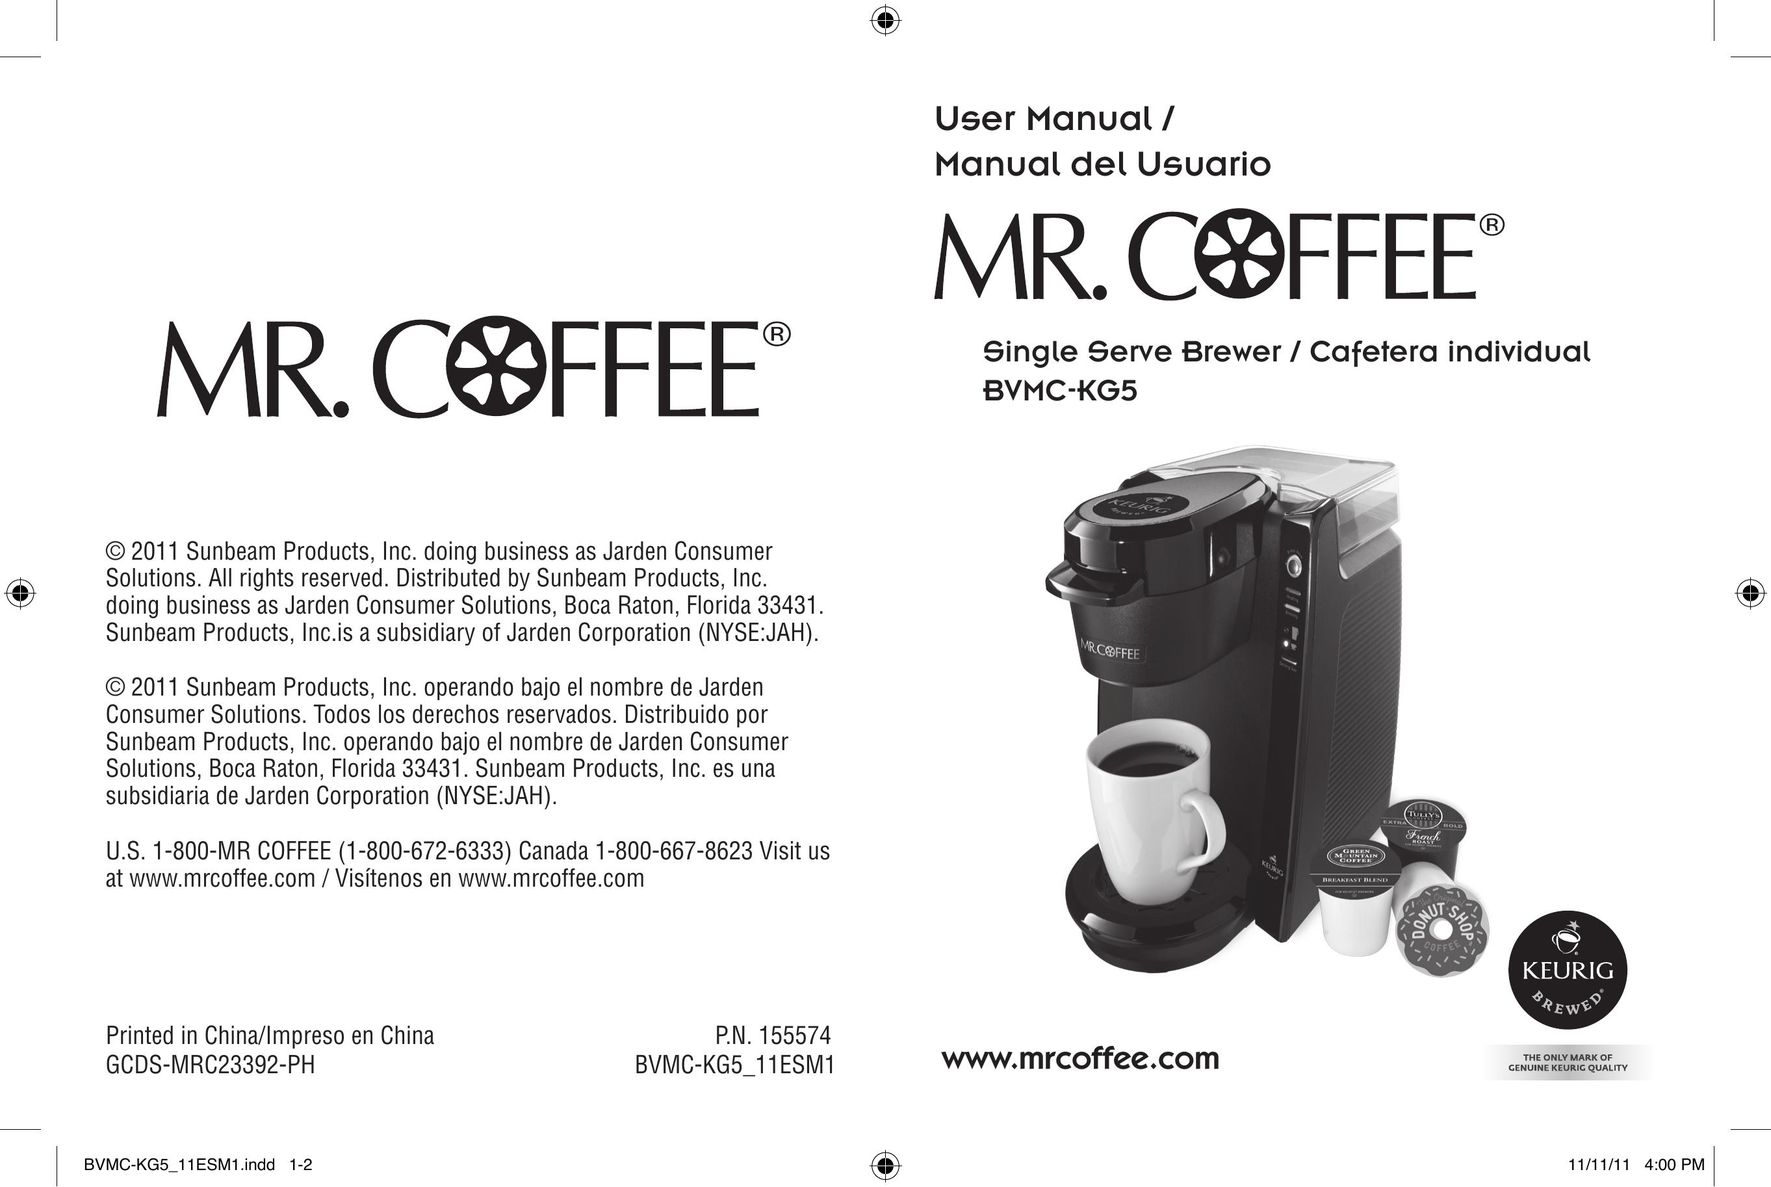 Mr. Coffee BVMC-KG5 Coffeemaker User Manual